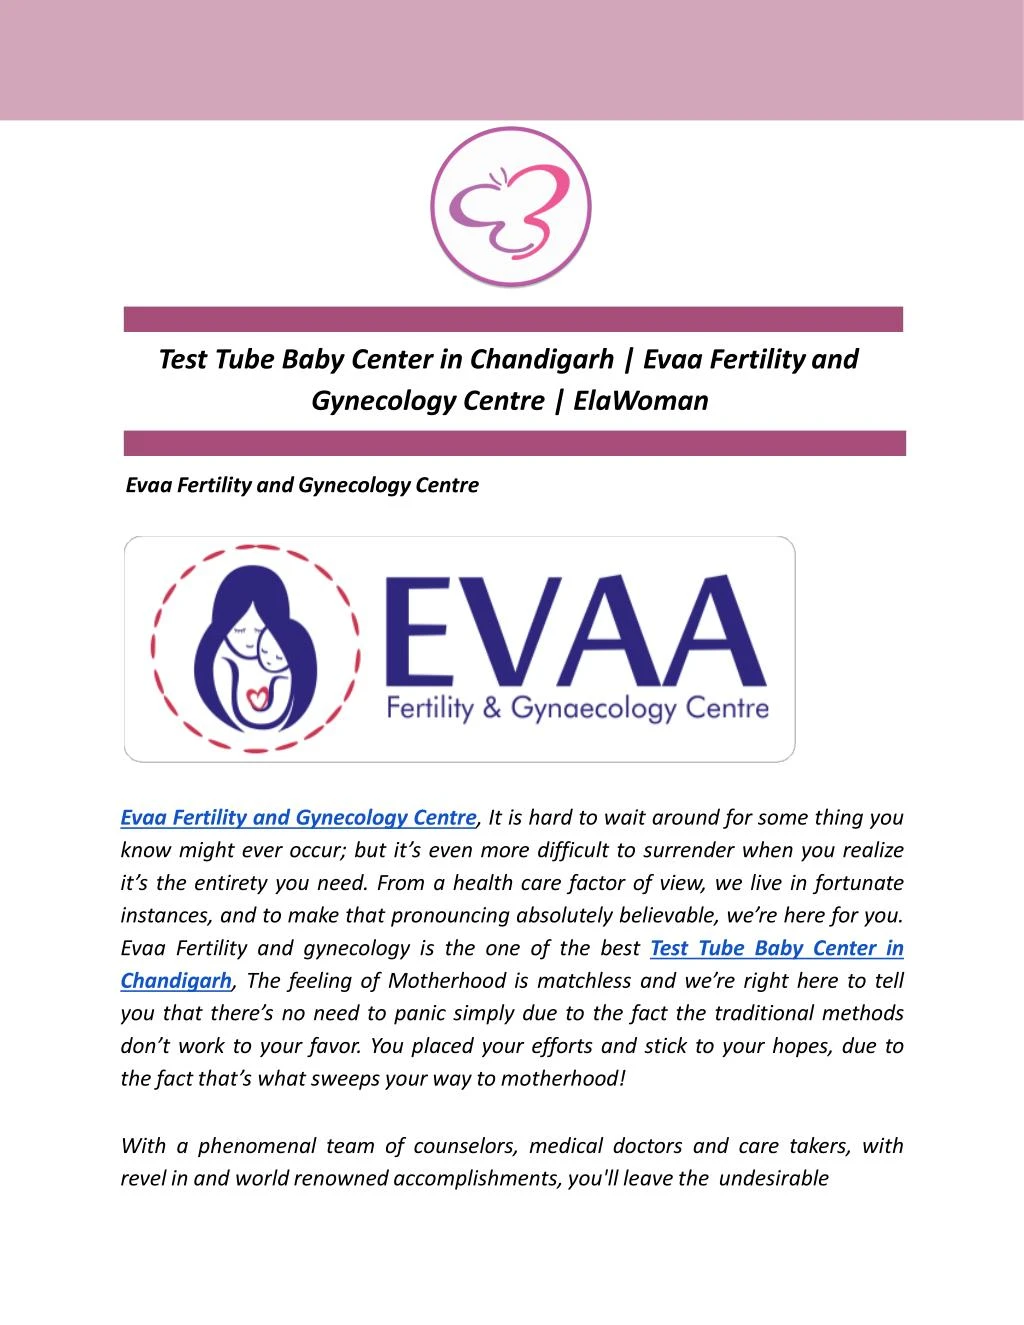 test tube baby center in chandigarh evaa